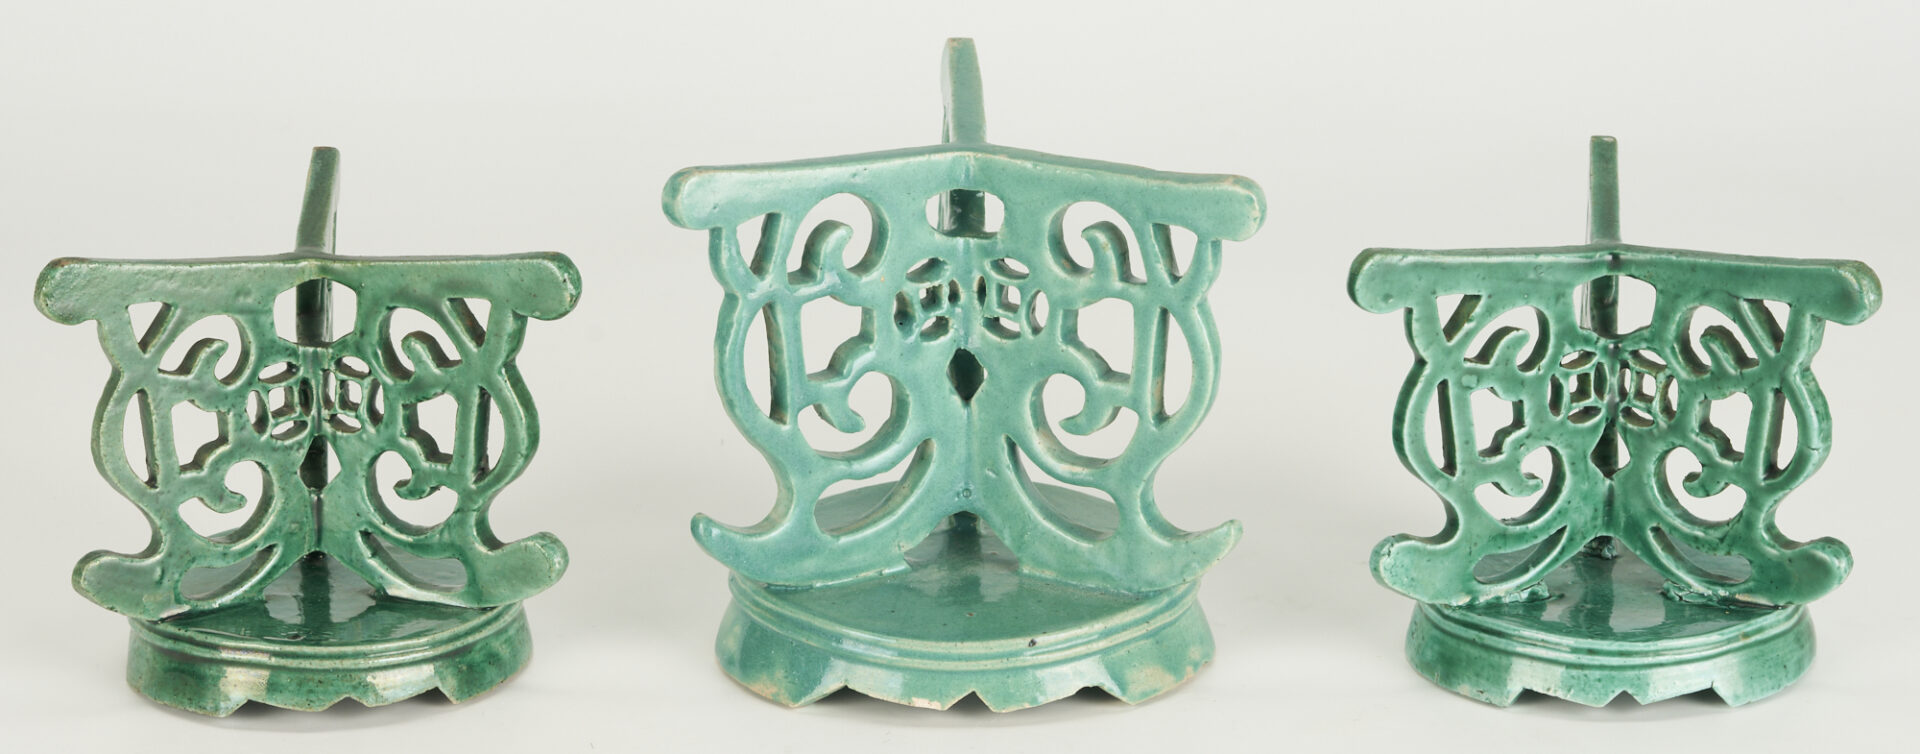 Lot 193: 17 Chinese Ceramic Items, Altar Fruit, Pedestals & Dish